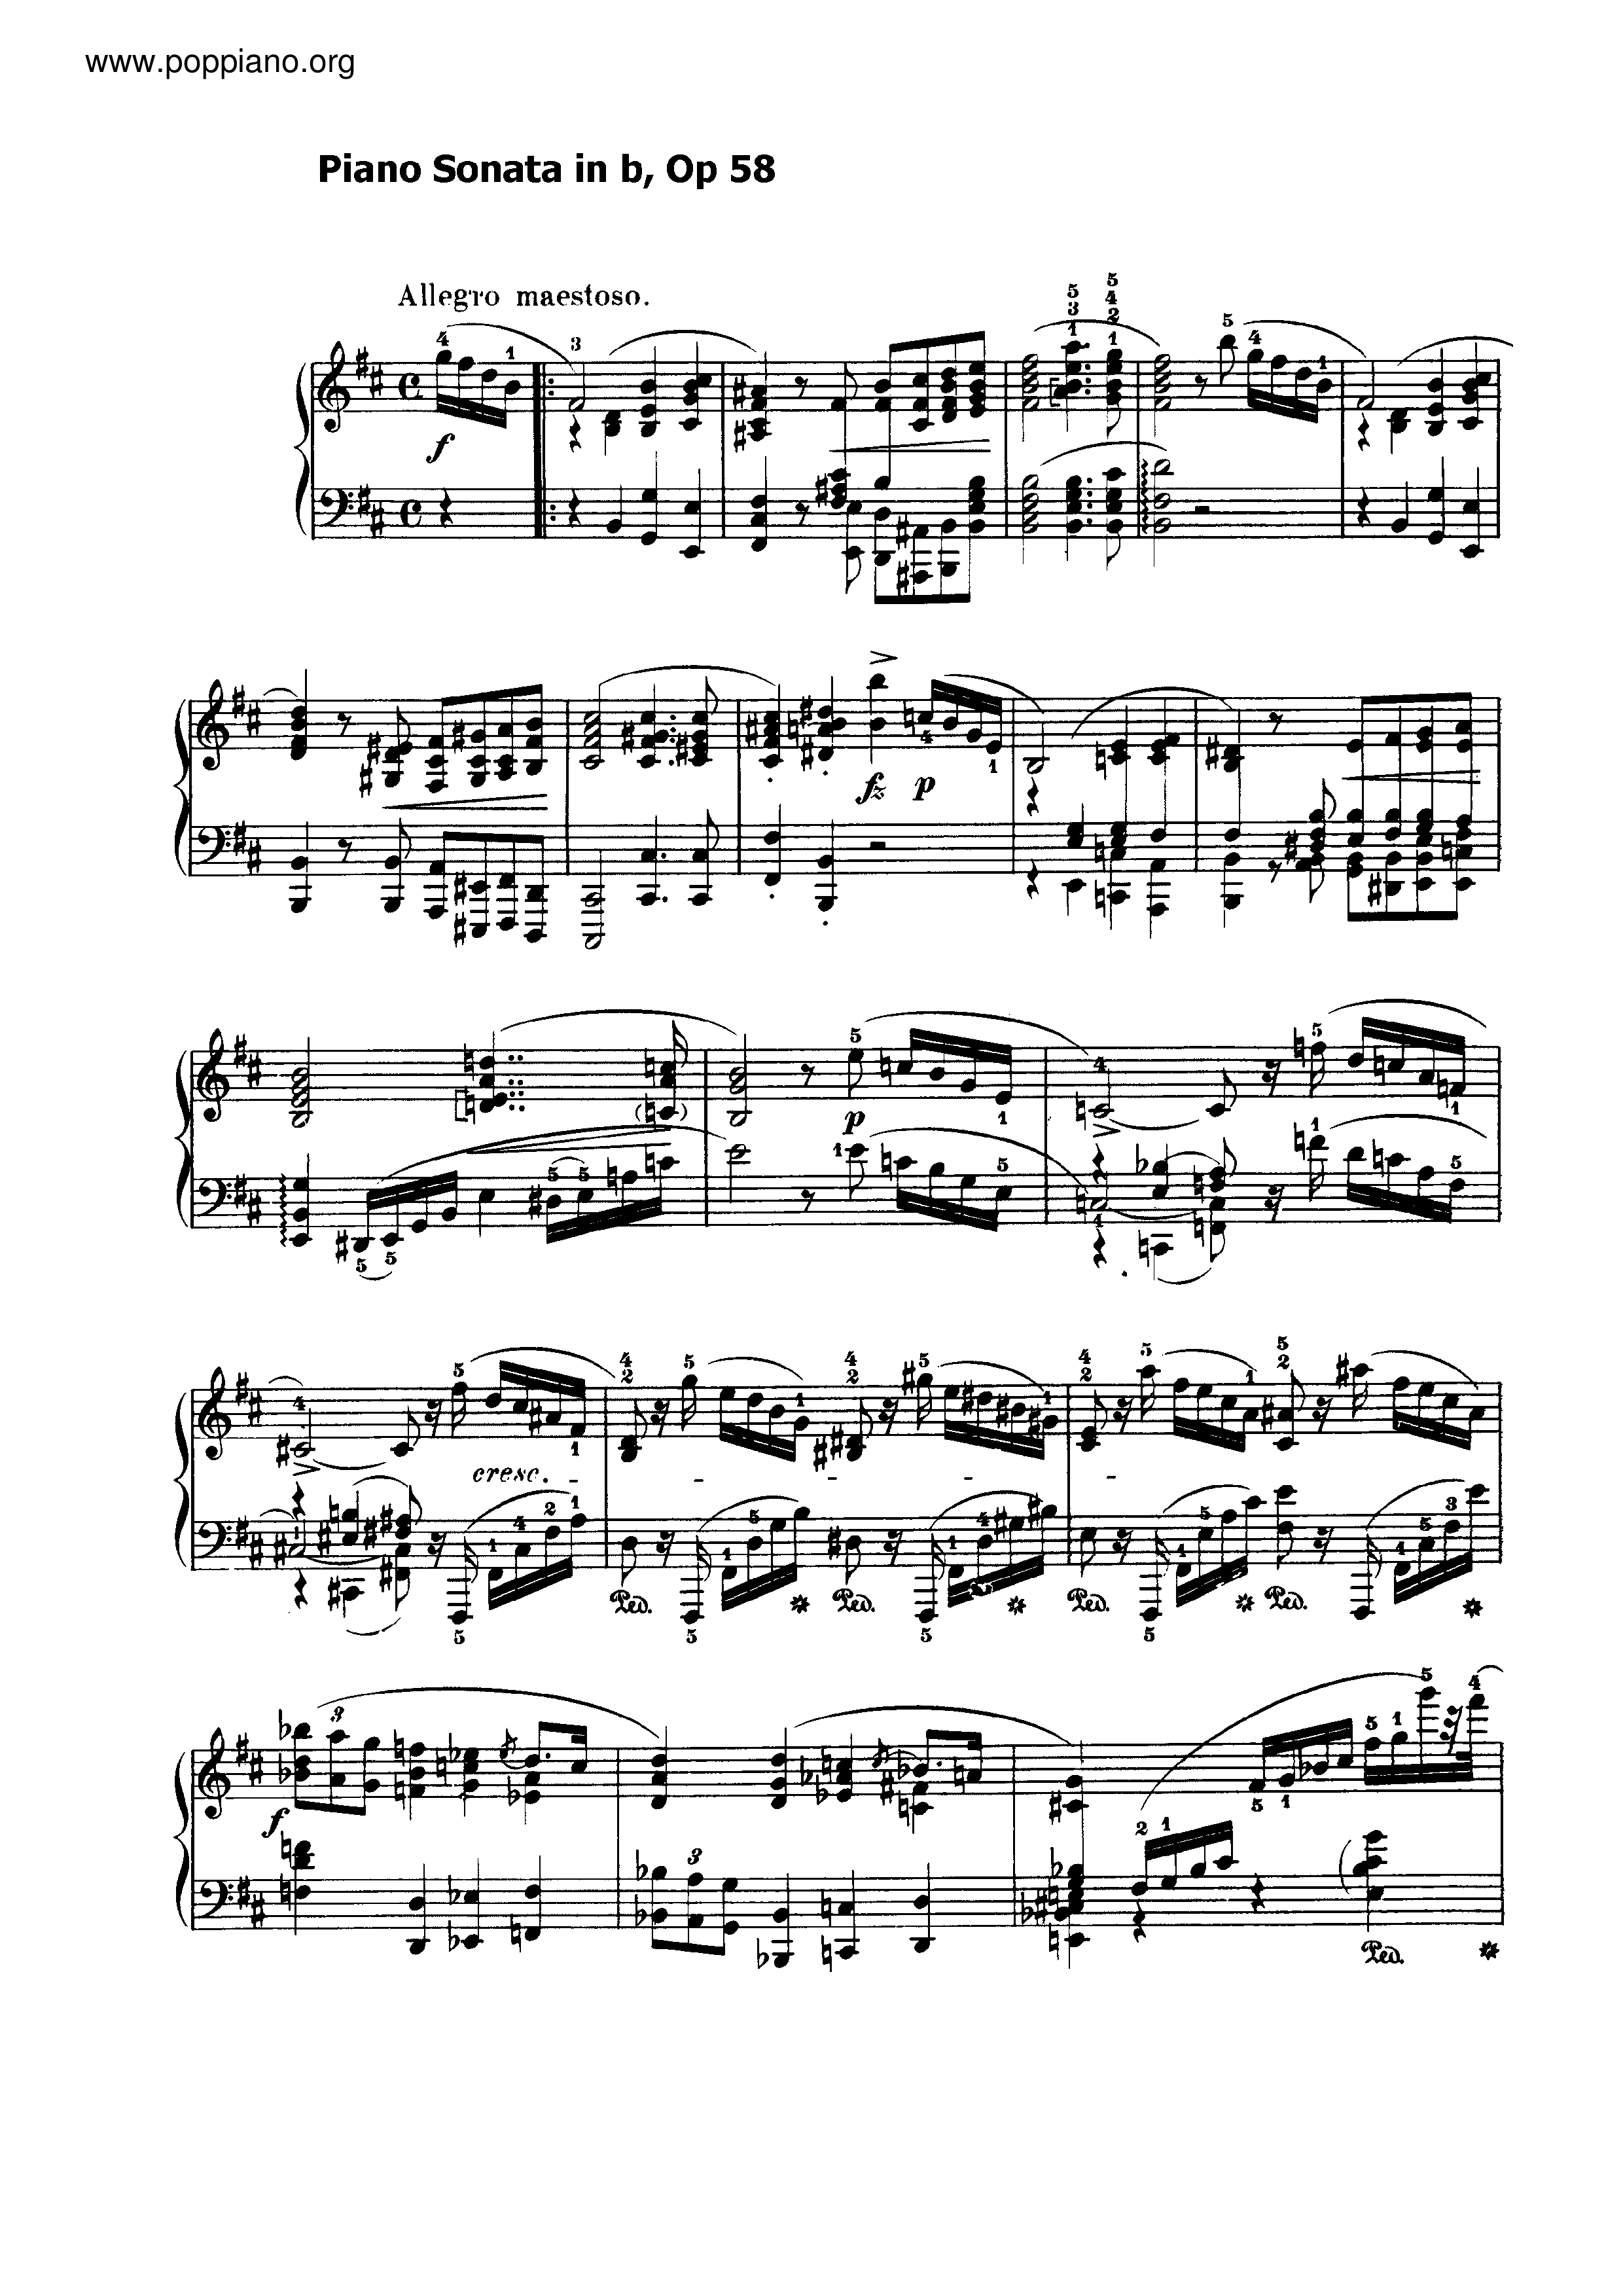 Sonata No. 3 in b minor, Op. 58ピアノ譜